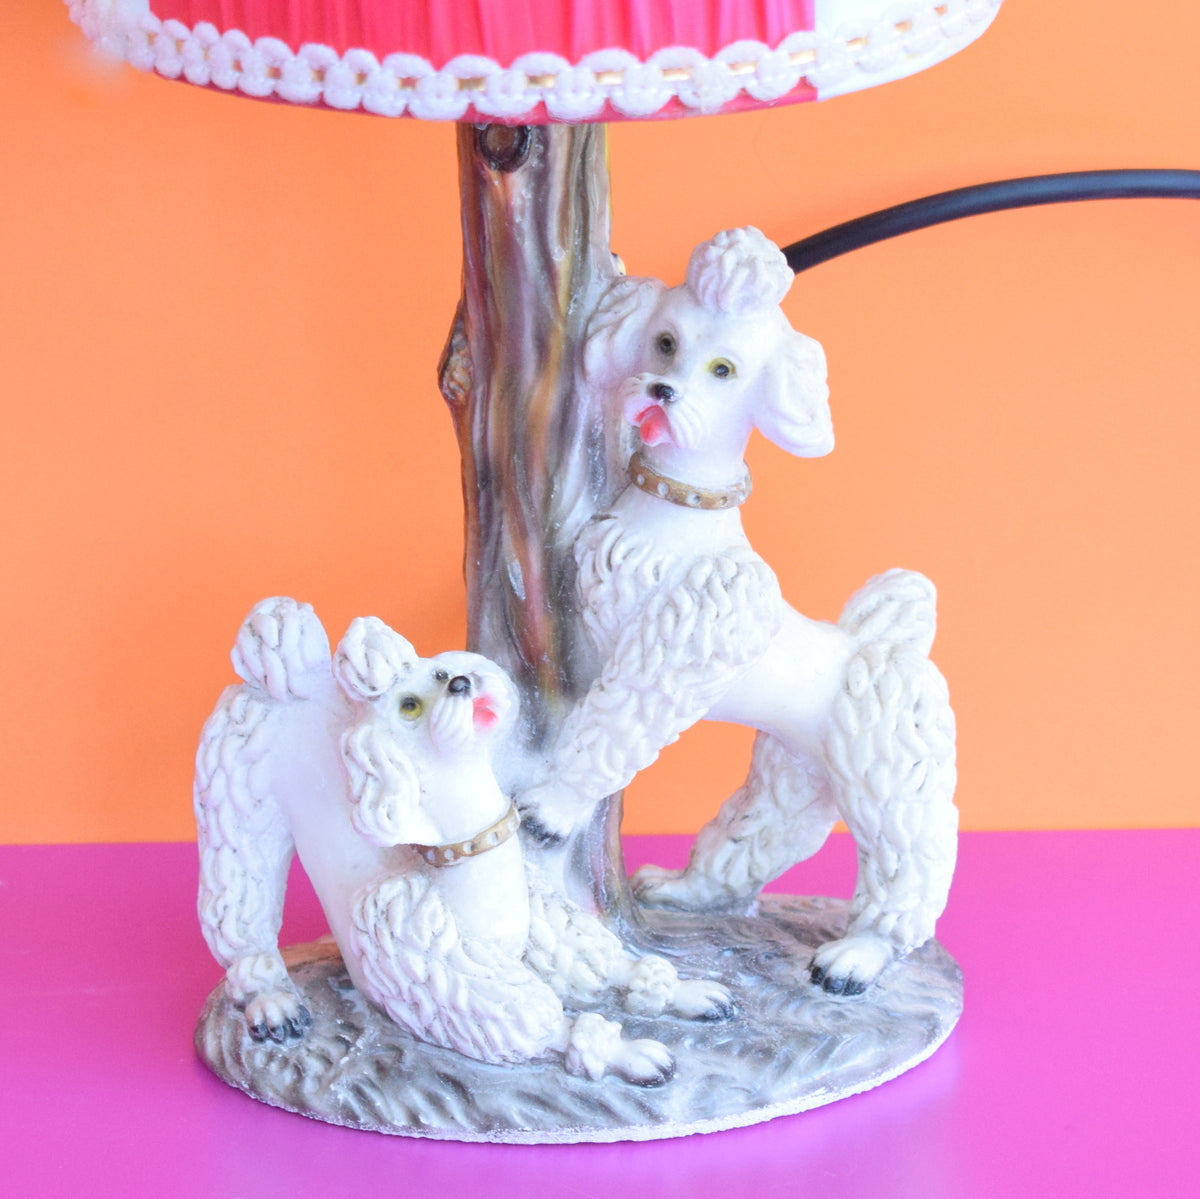 Vintage 1950s Ceramic Poodle Lamp & Shade - White & Pink